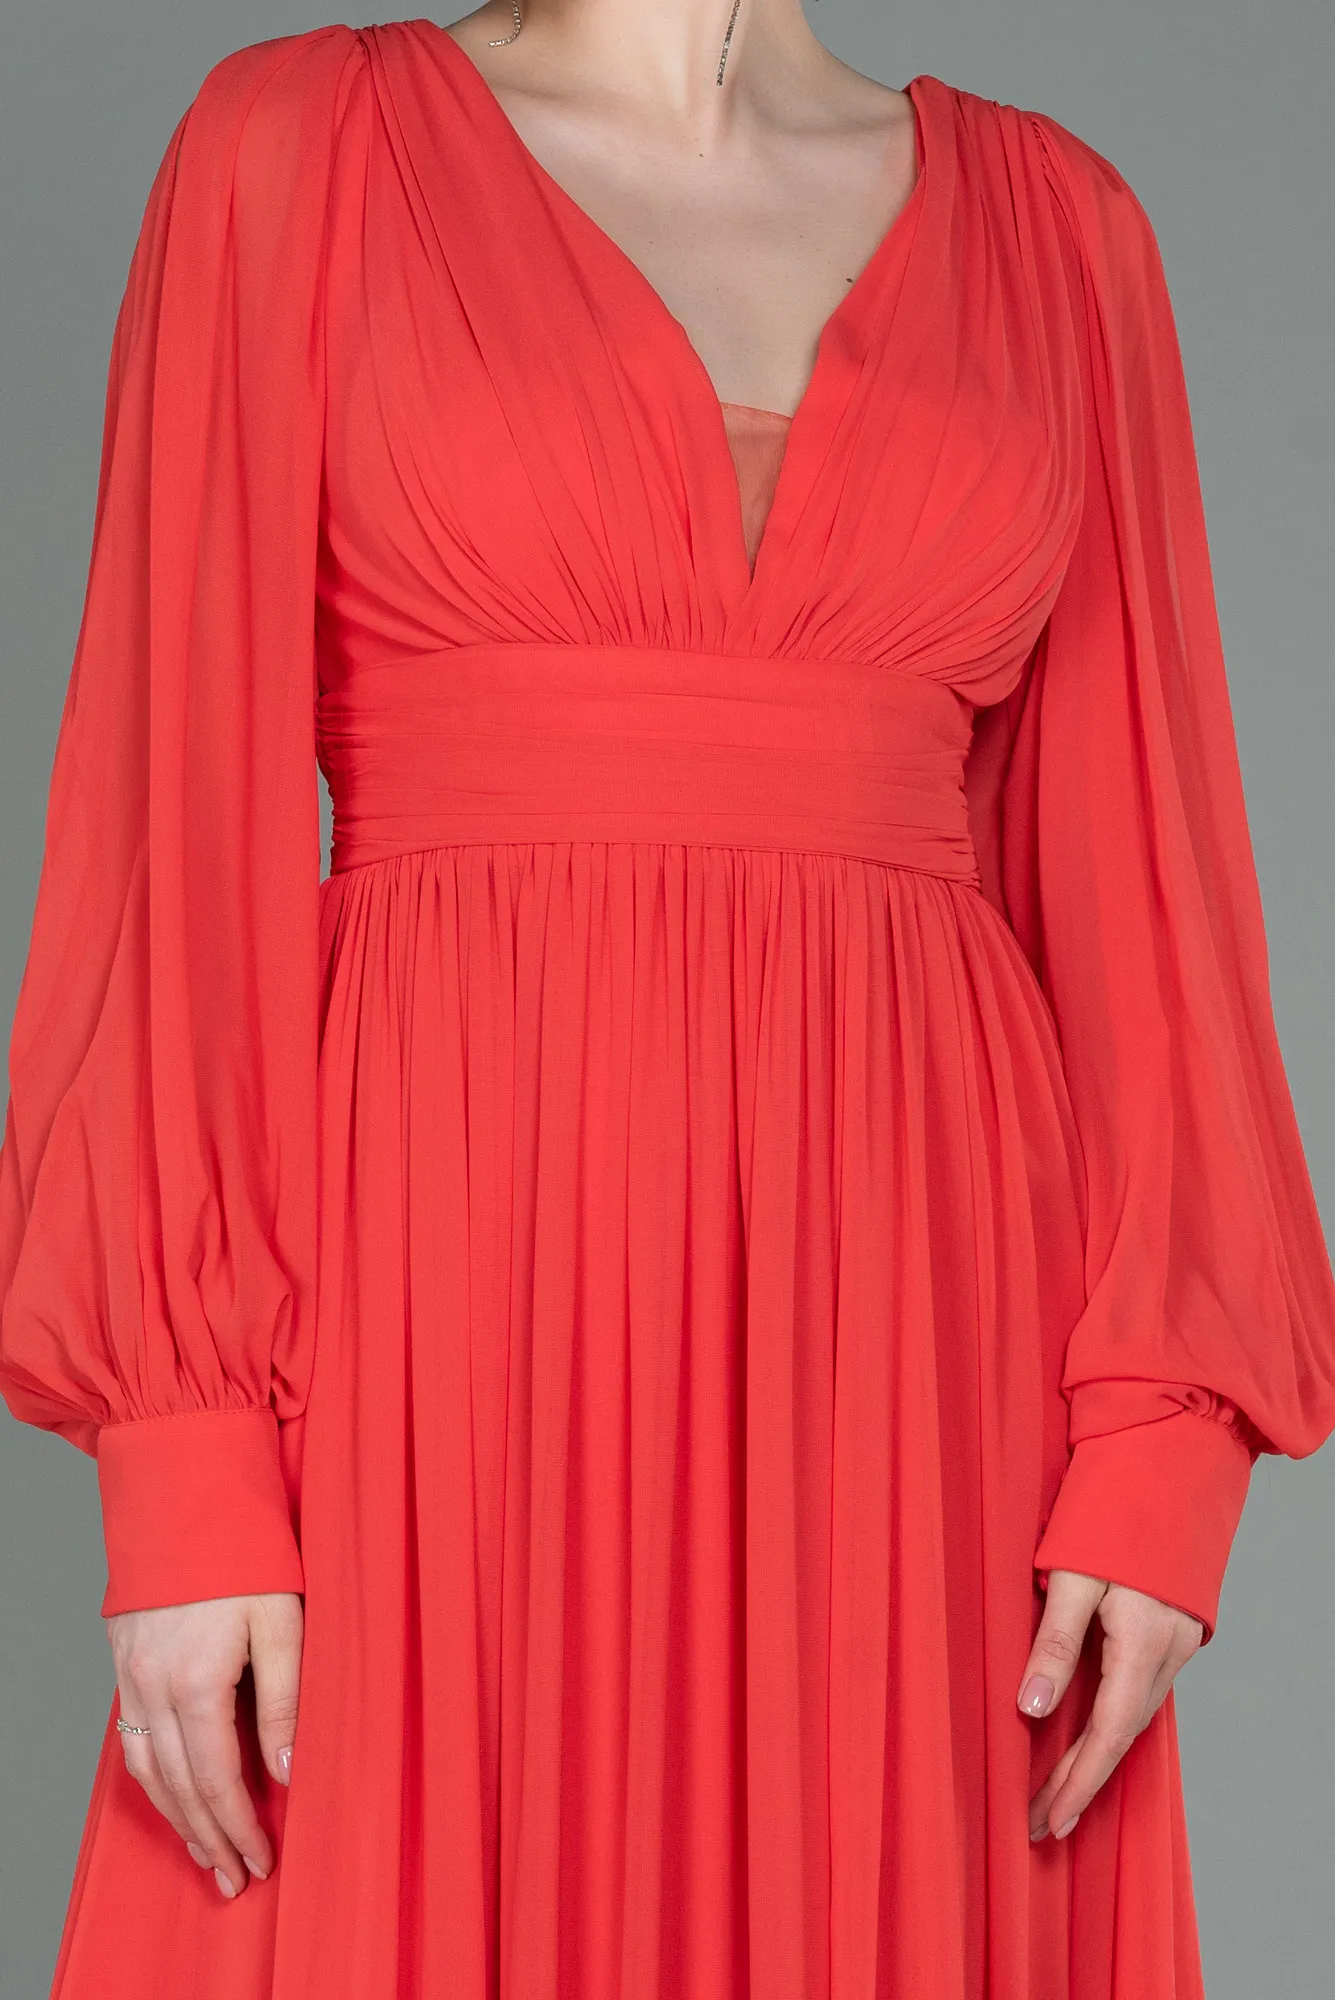 Orange-Long Chiffon Evening Dress ABU1702